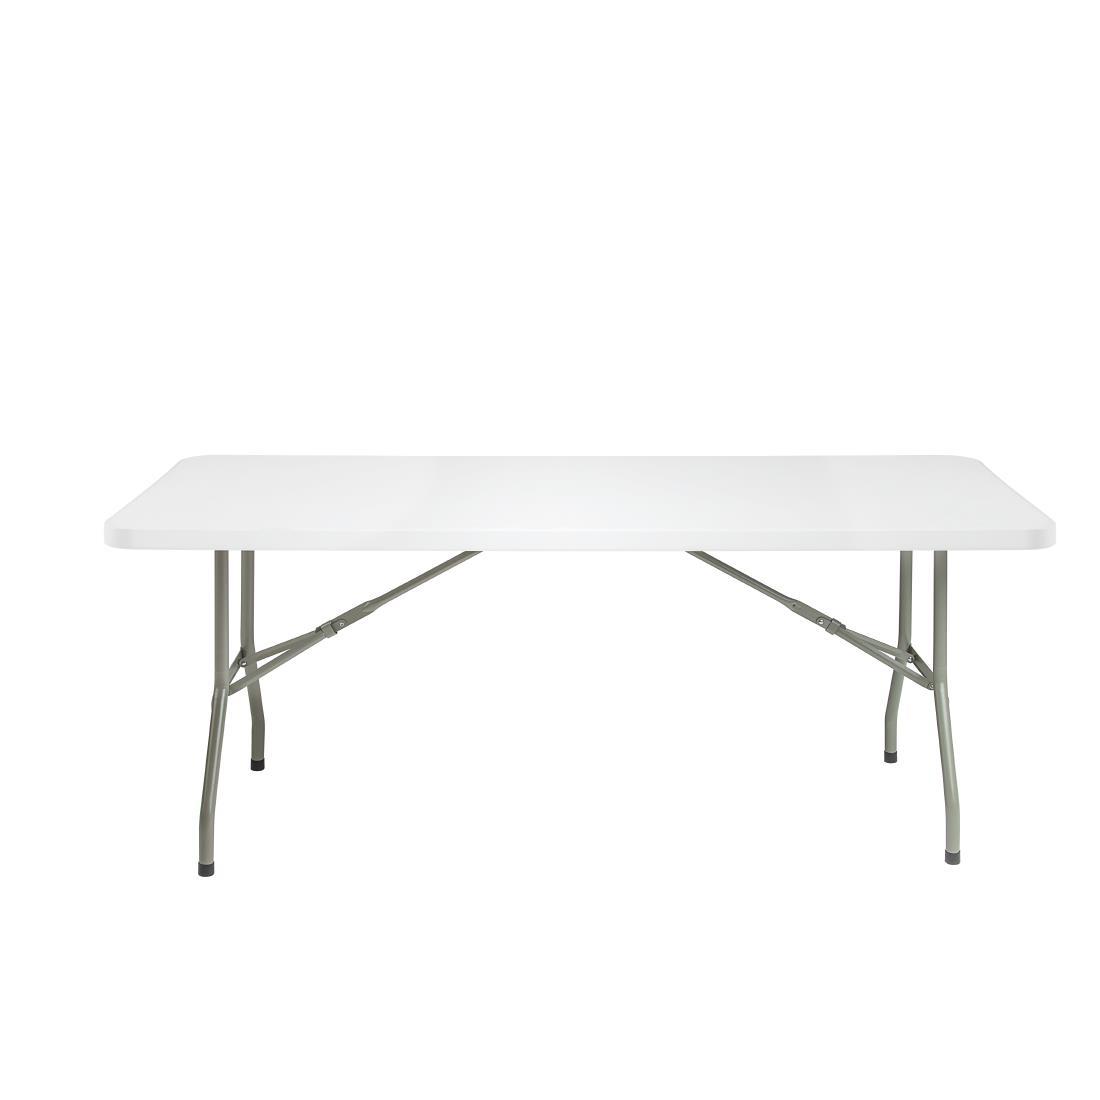 Bolero PE Rectangular Folding Table White 6ft (Single) - U579  - 3